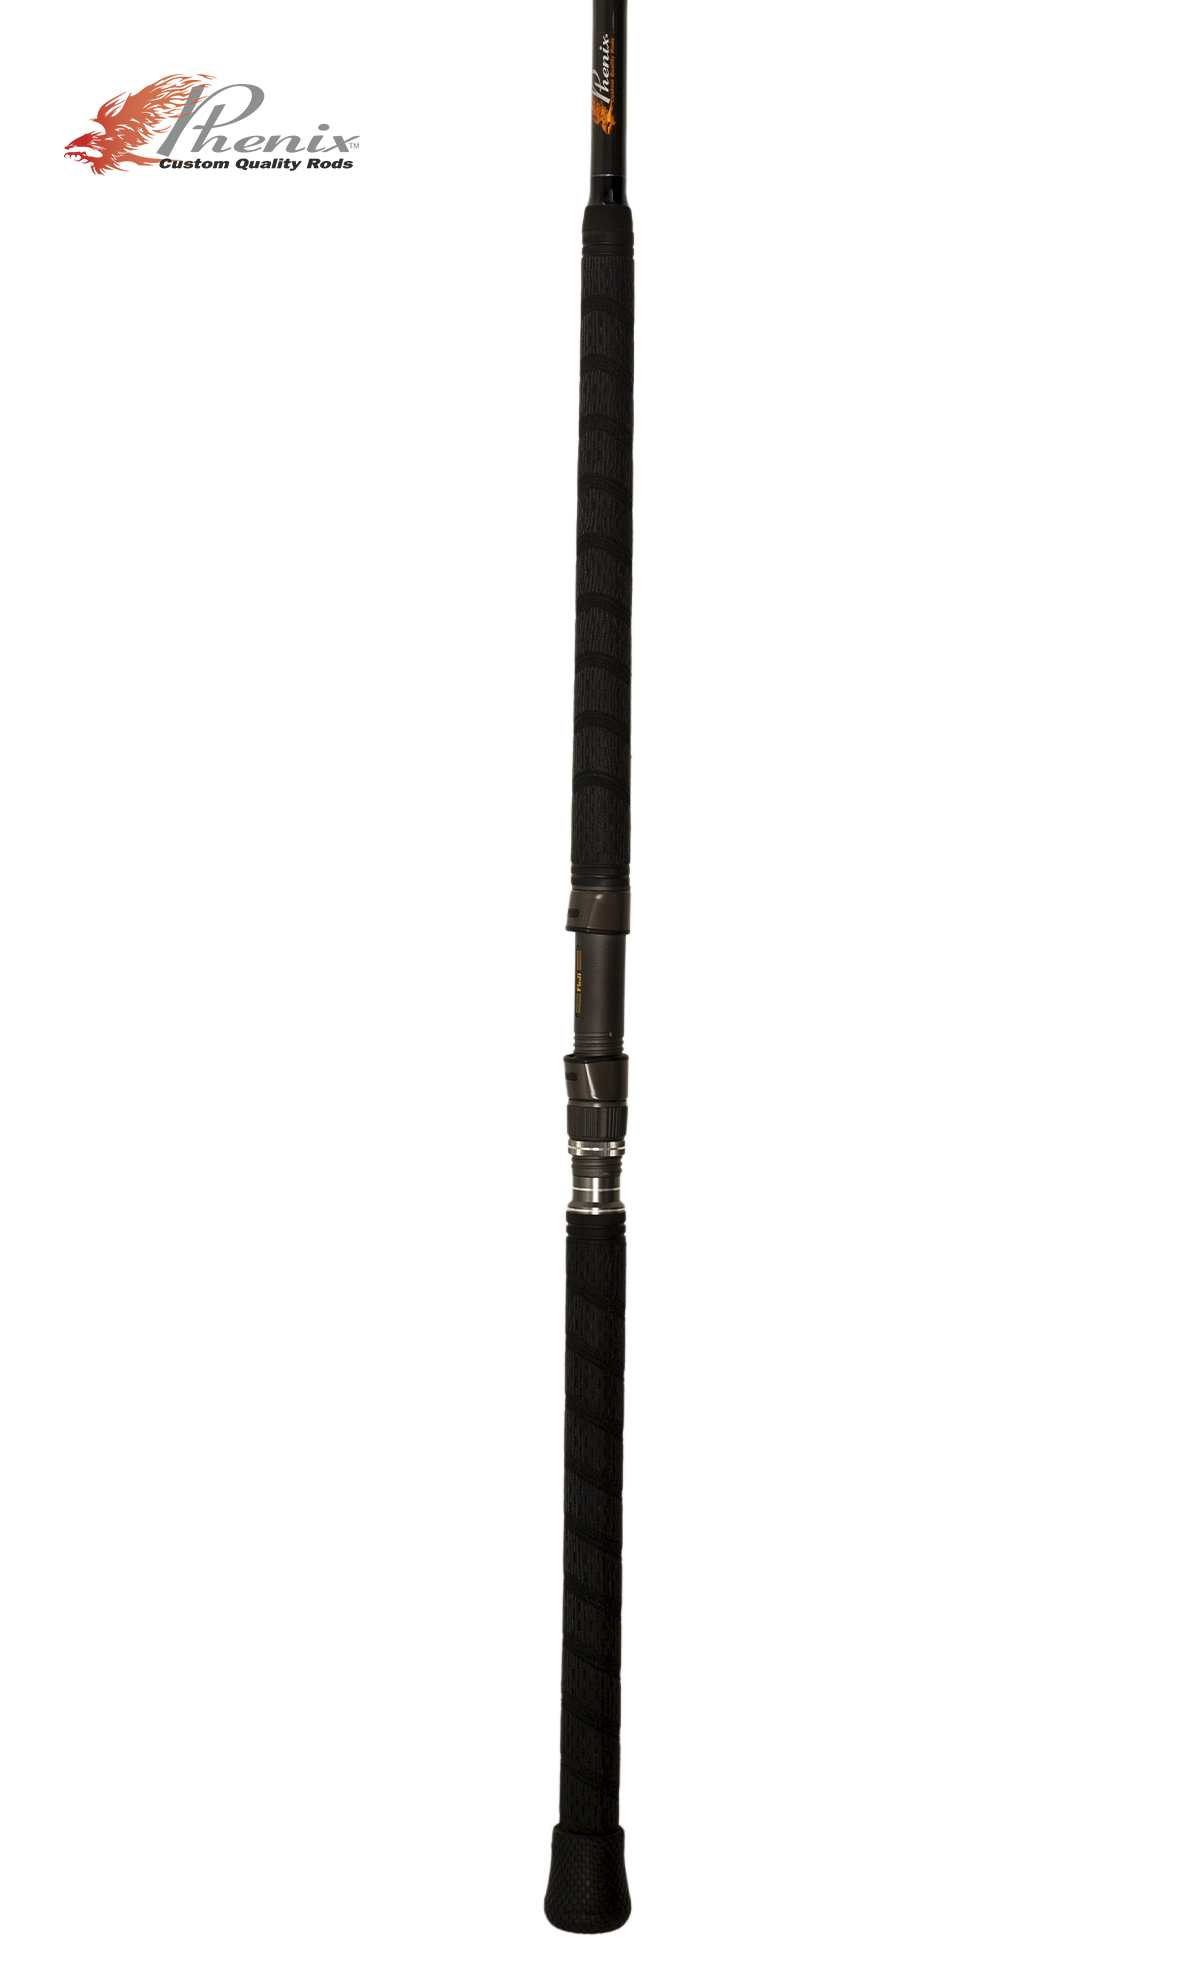 Phenix Black Diamond Saltwater Casting Rod - PSW-C 868MH - 8'6